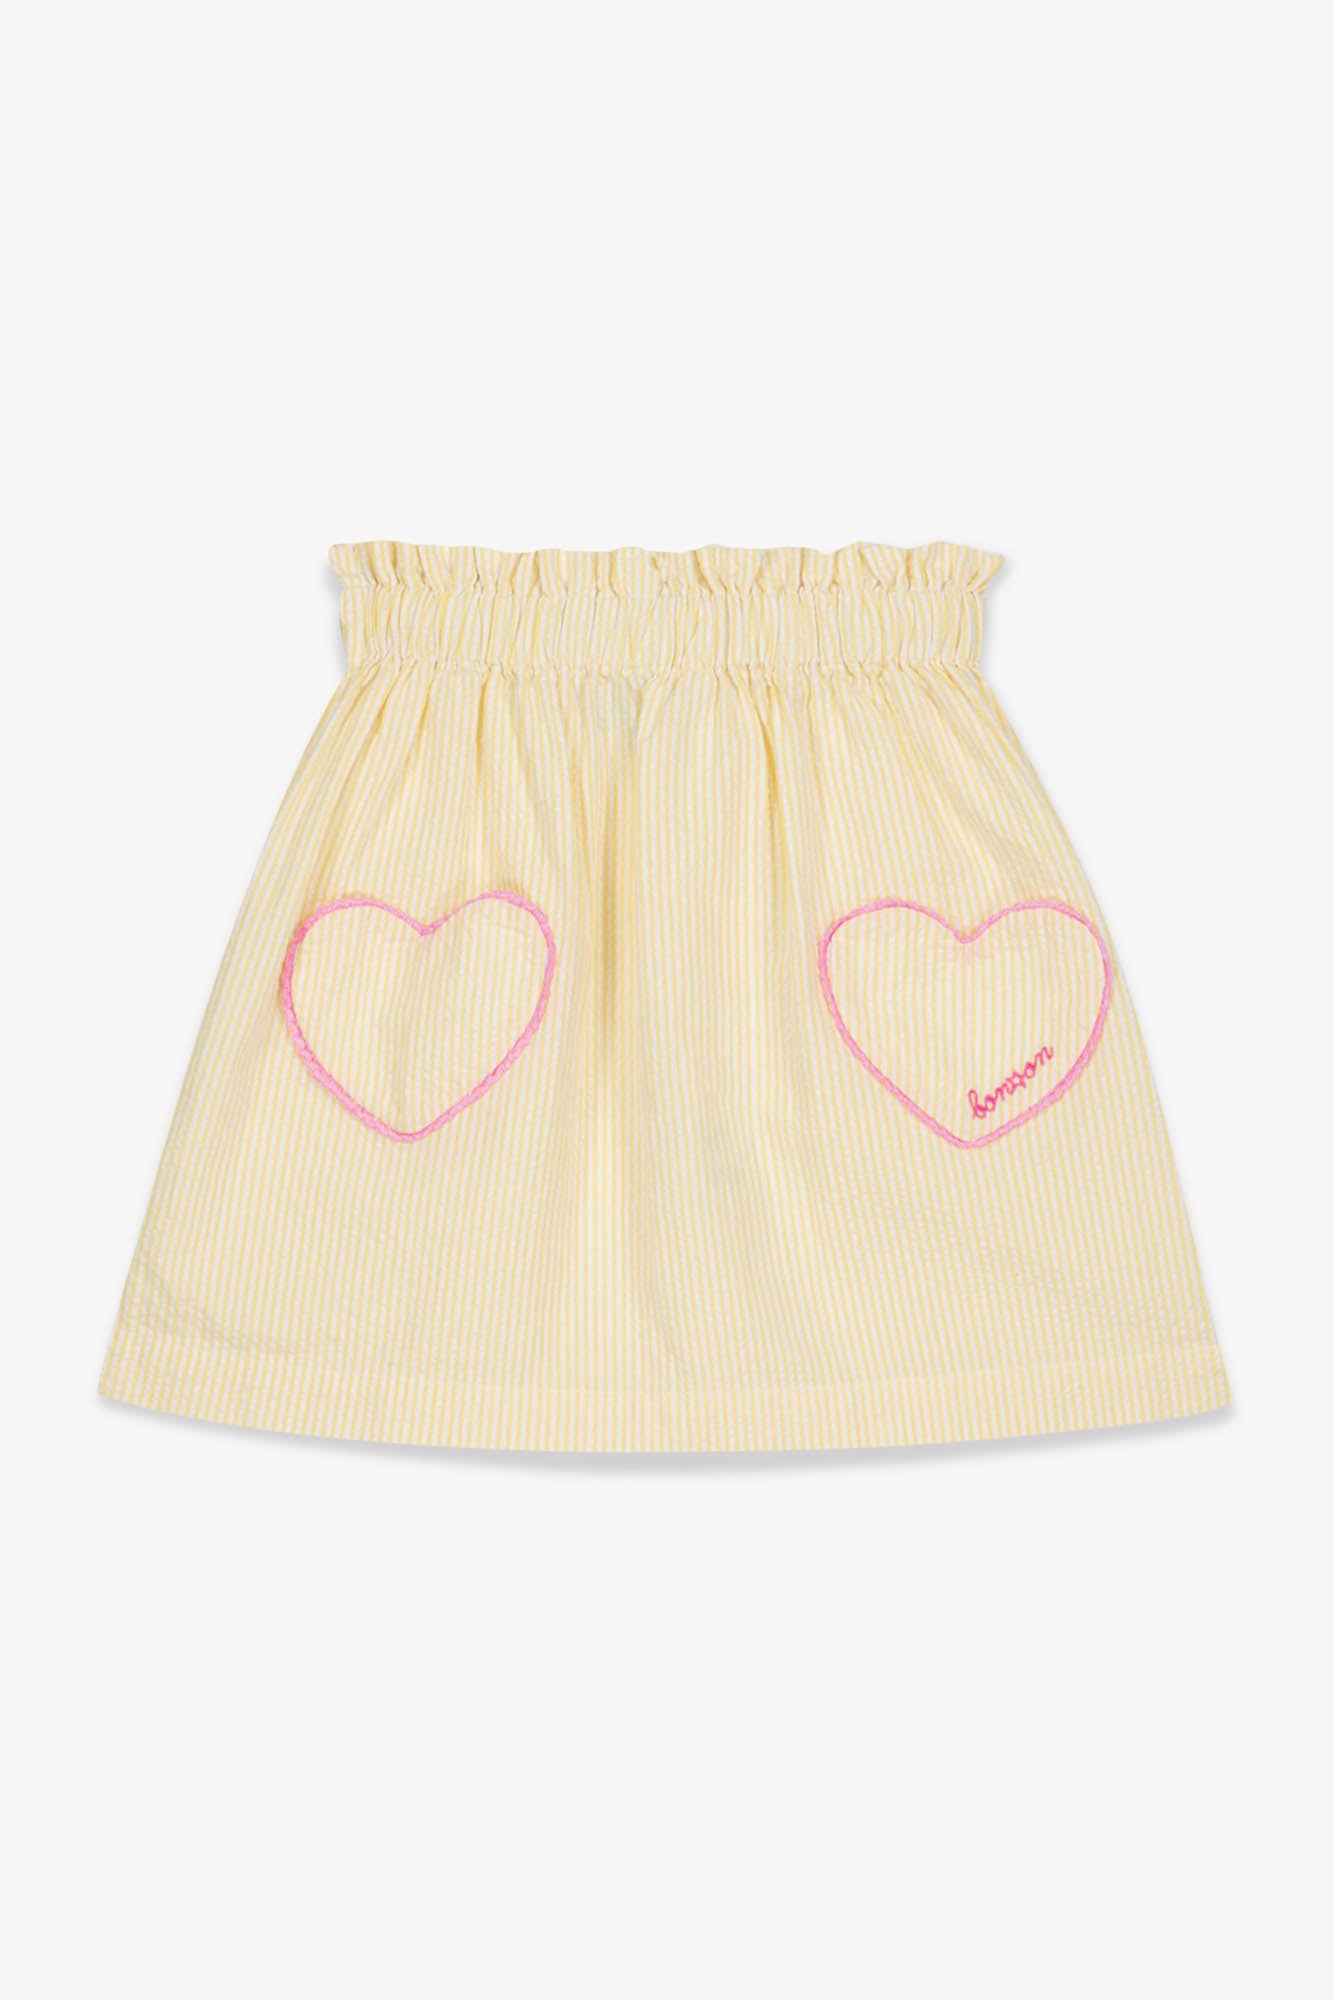 Skirt - Douchka Yellow striped cotton seersucker